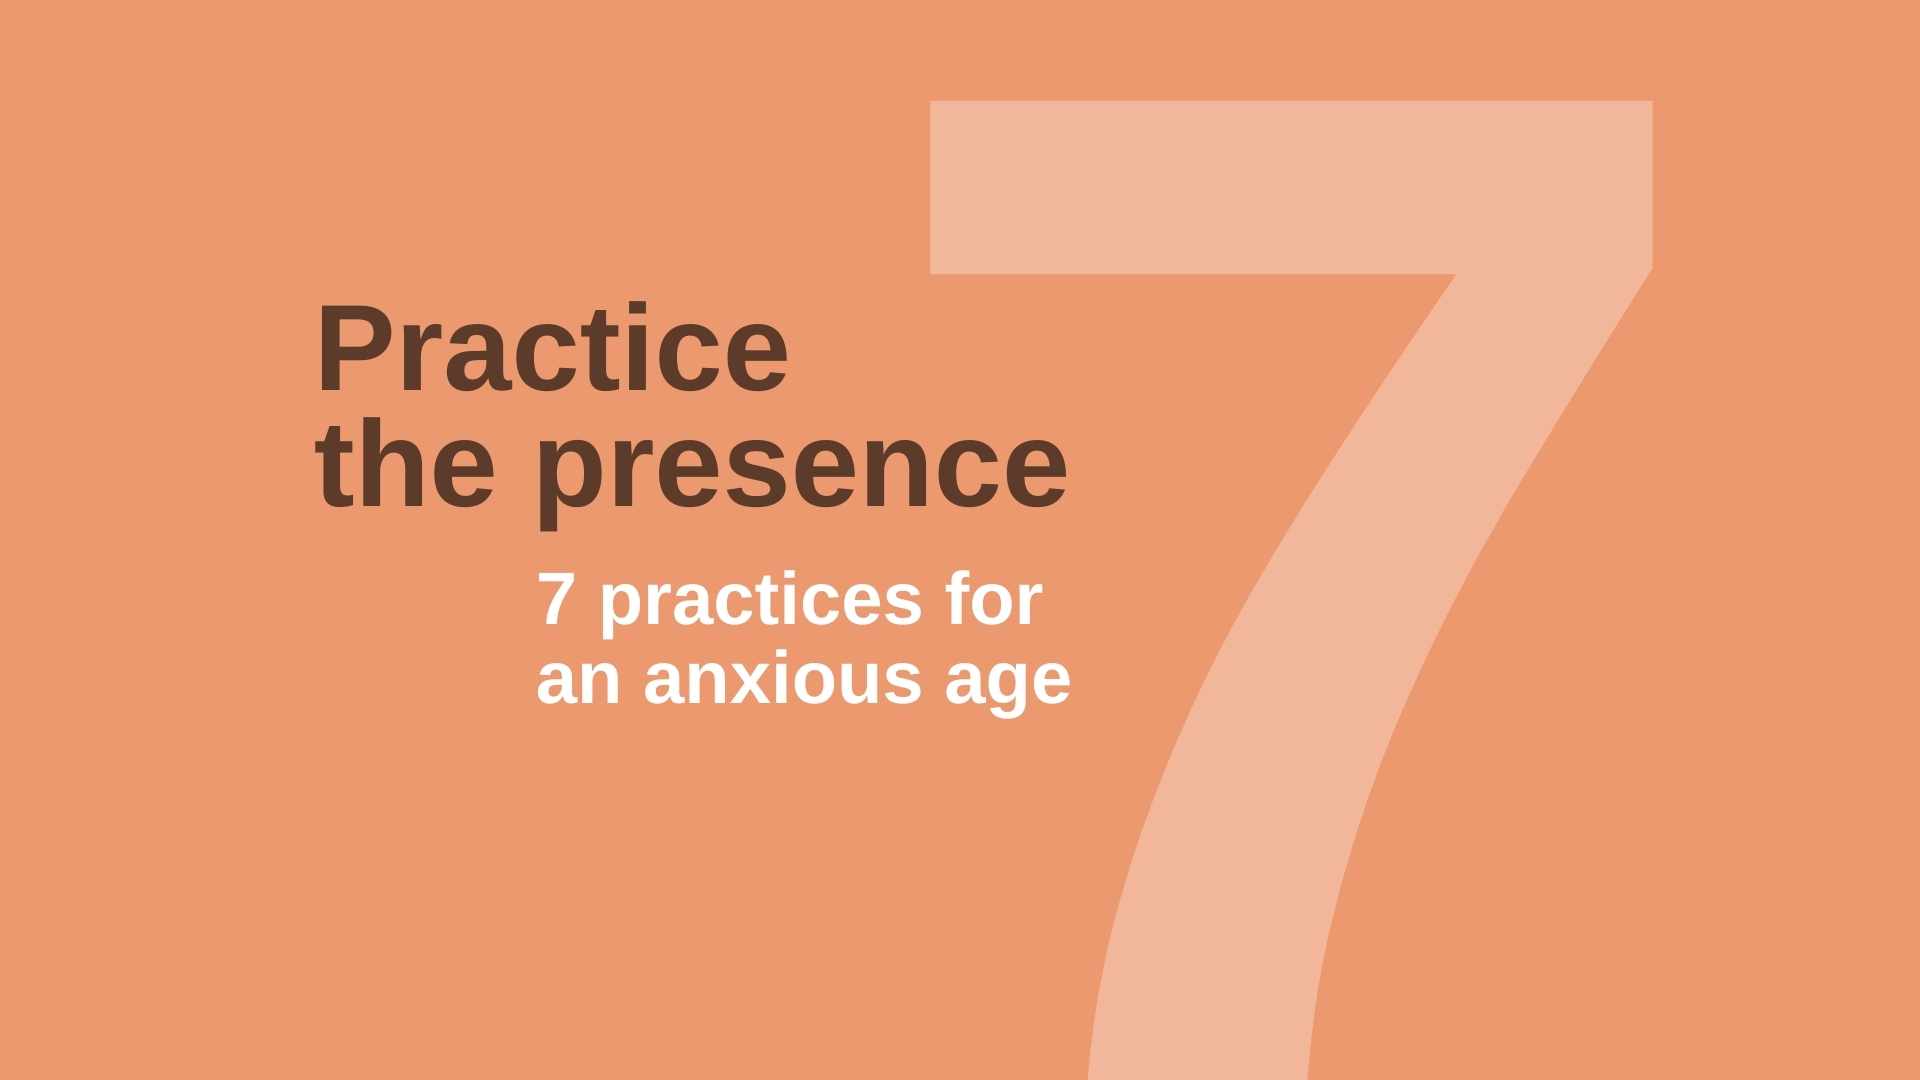 Practice the presence